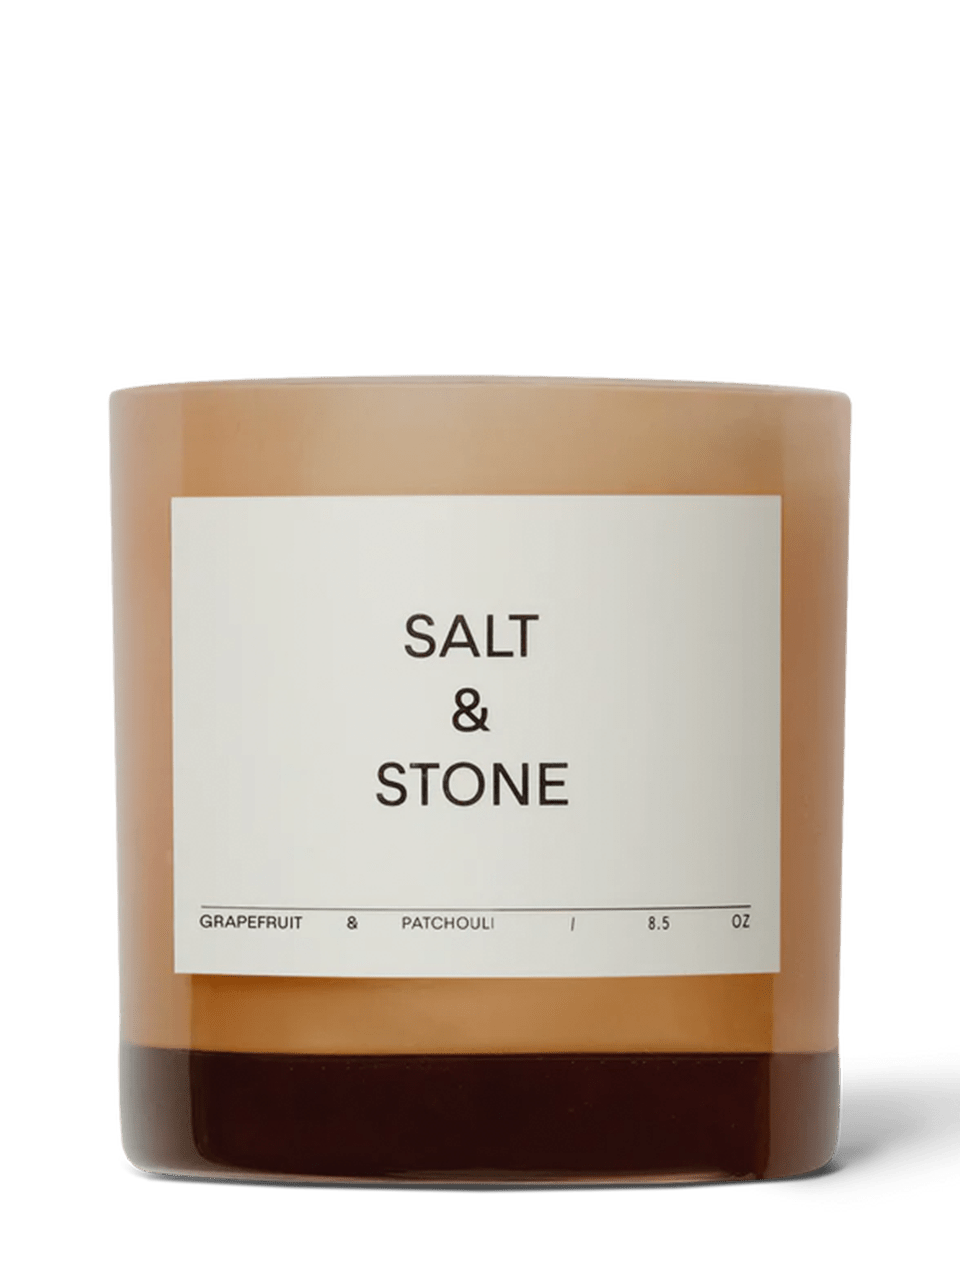 The Candle Salt & Stone Grapefruit & Hinoki 